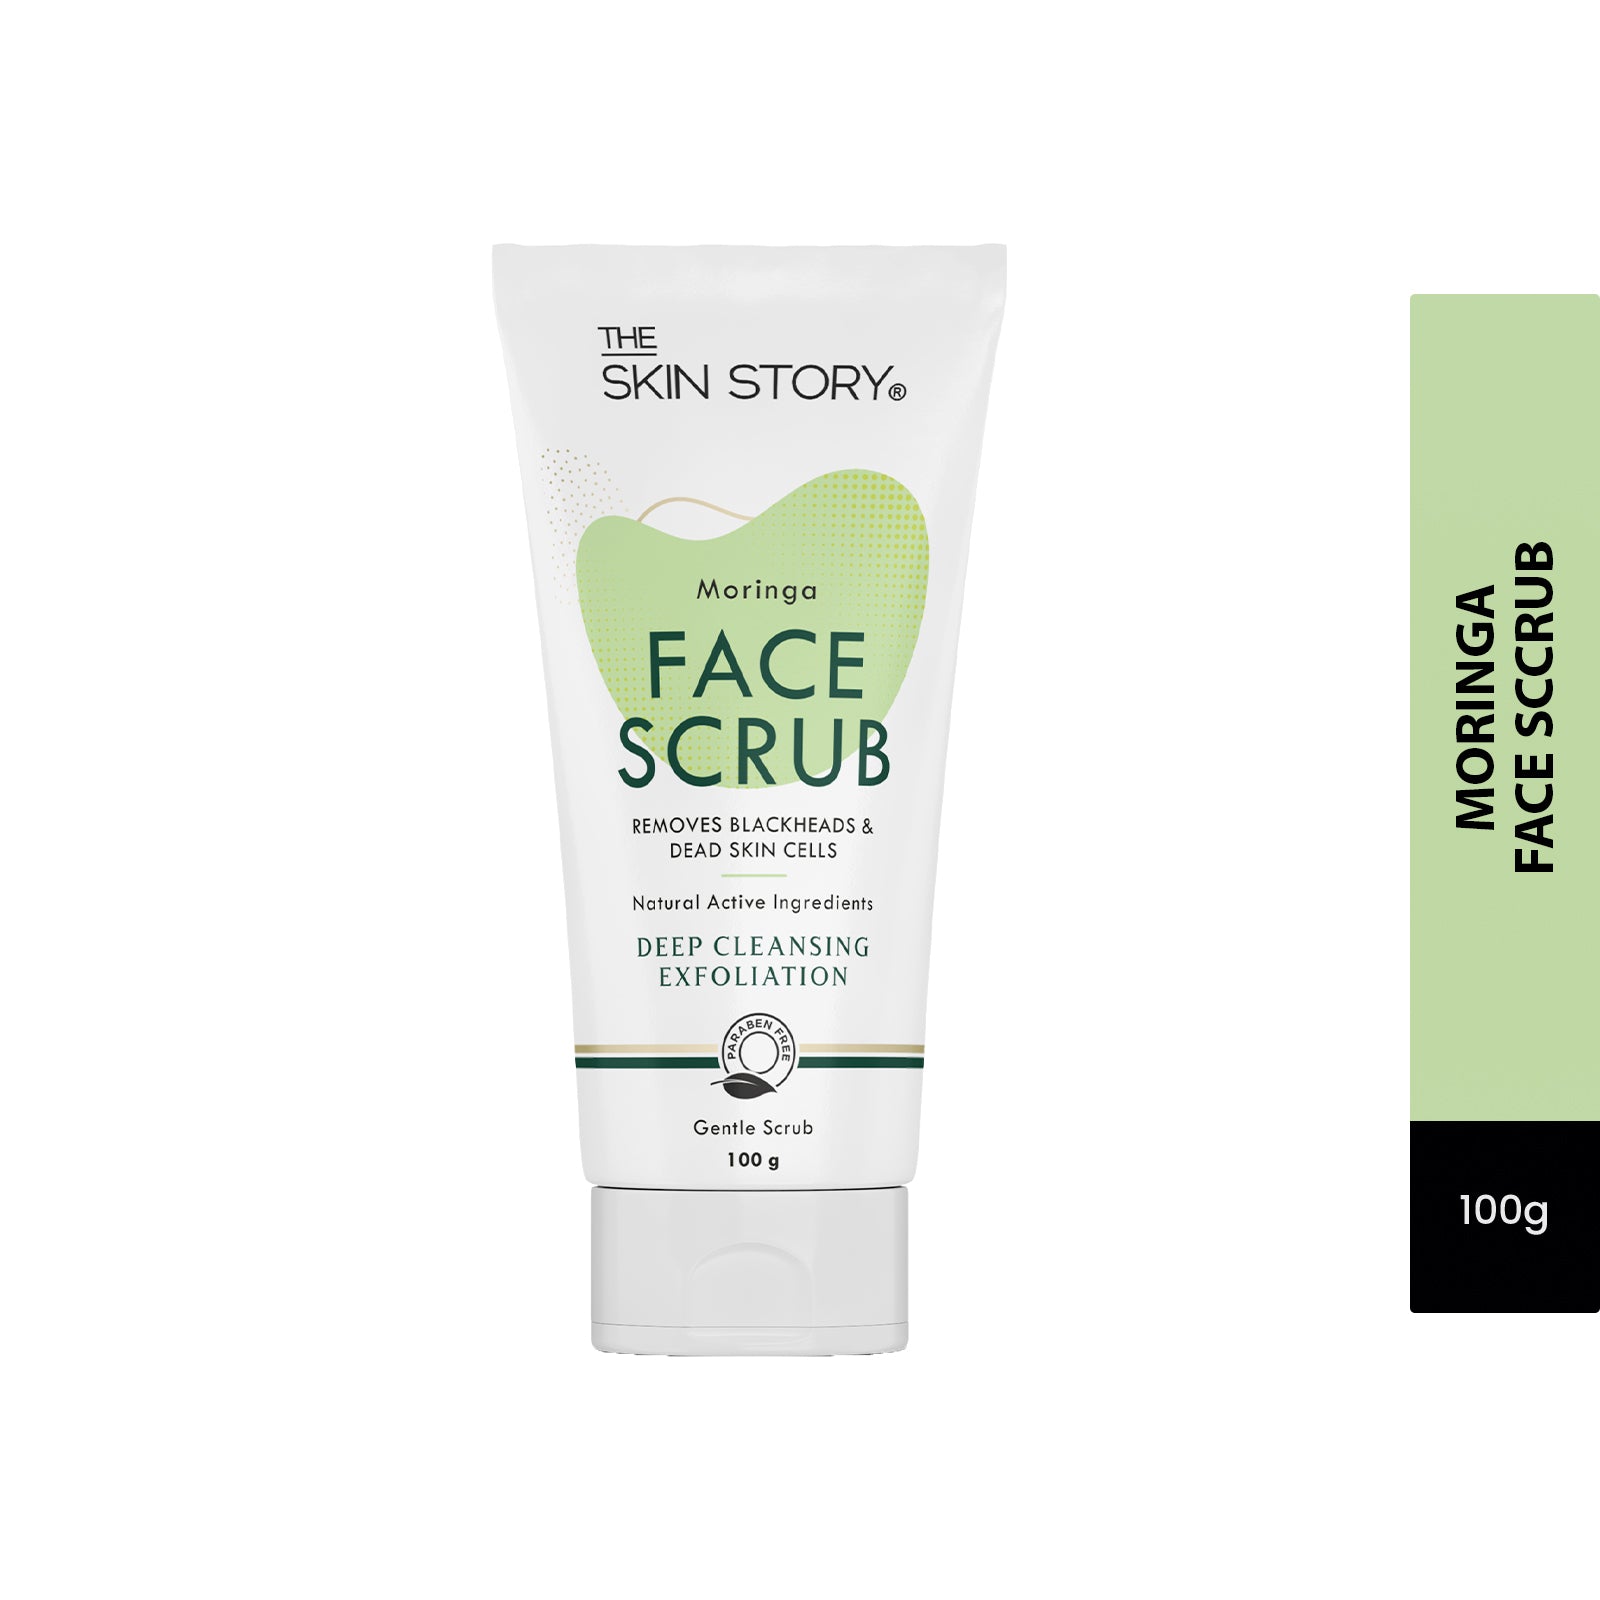 The Skin Story Exfoliating Gentle Face Scrub for Women| Blackhead & Tan Remover | Dead Skin Exfoliator for Glowing Skin | Sensitive & Normal Skin | Gentle Scrub | Moringa | 100g